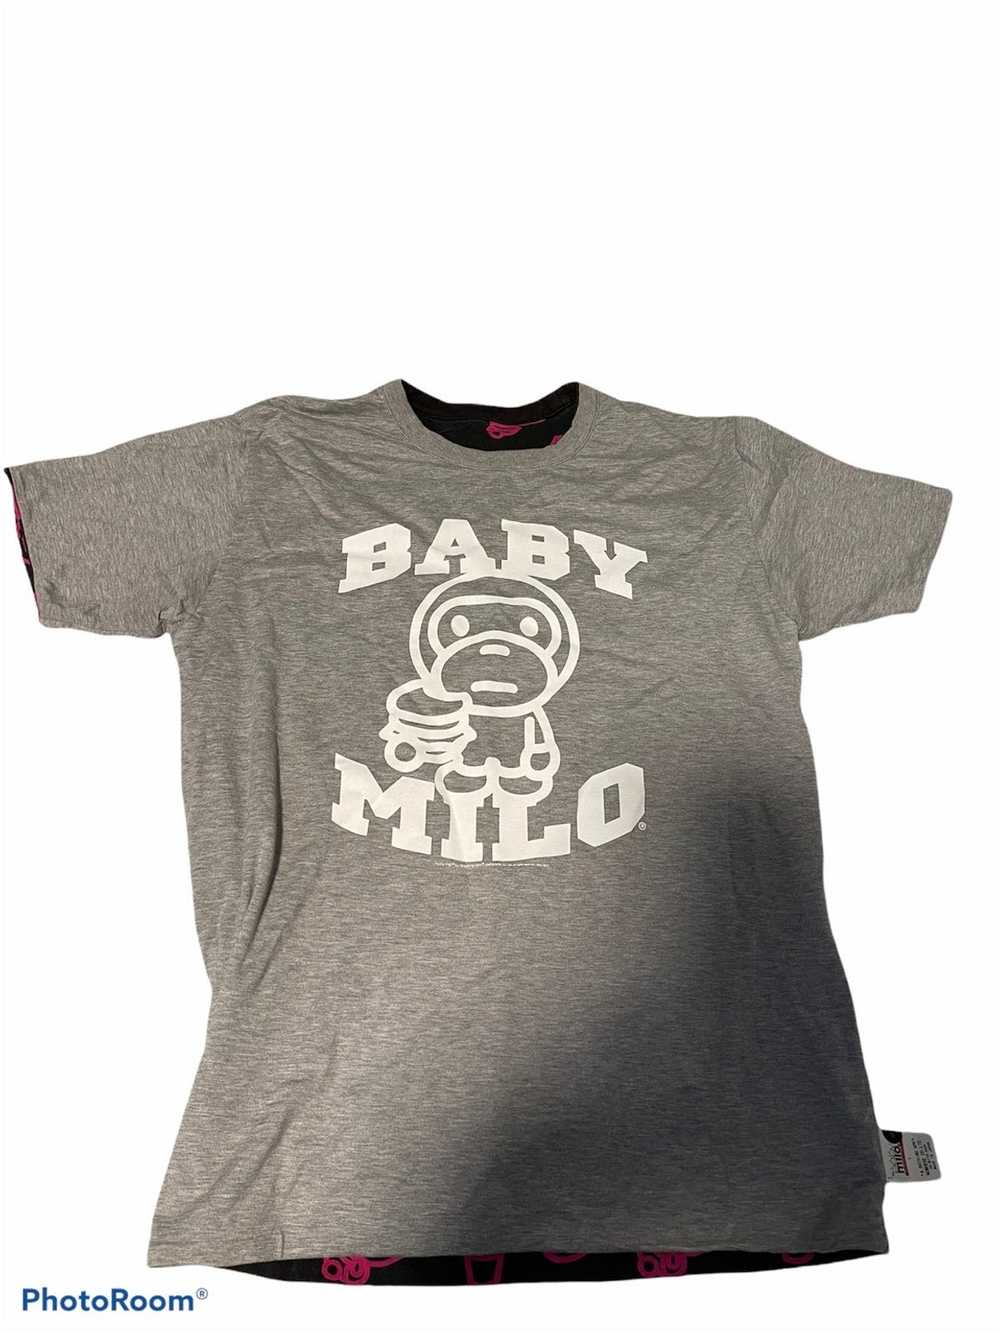 Bape baby milo colab reversible shirt - image 1